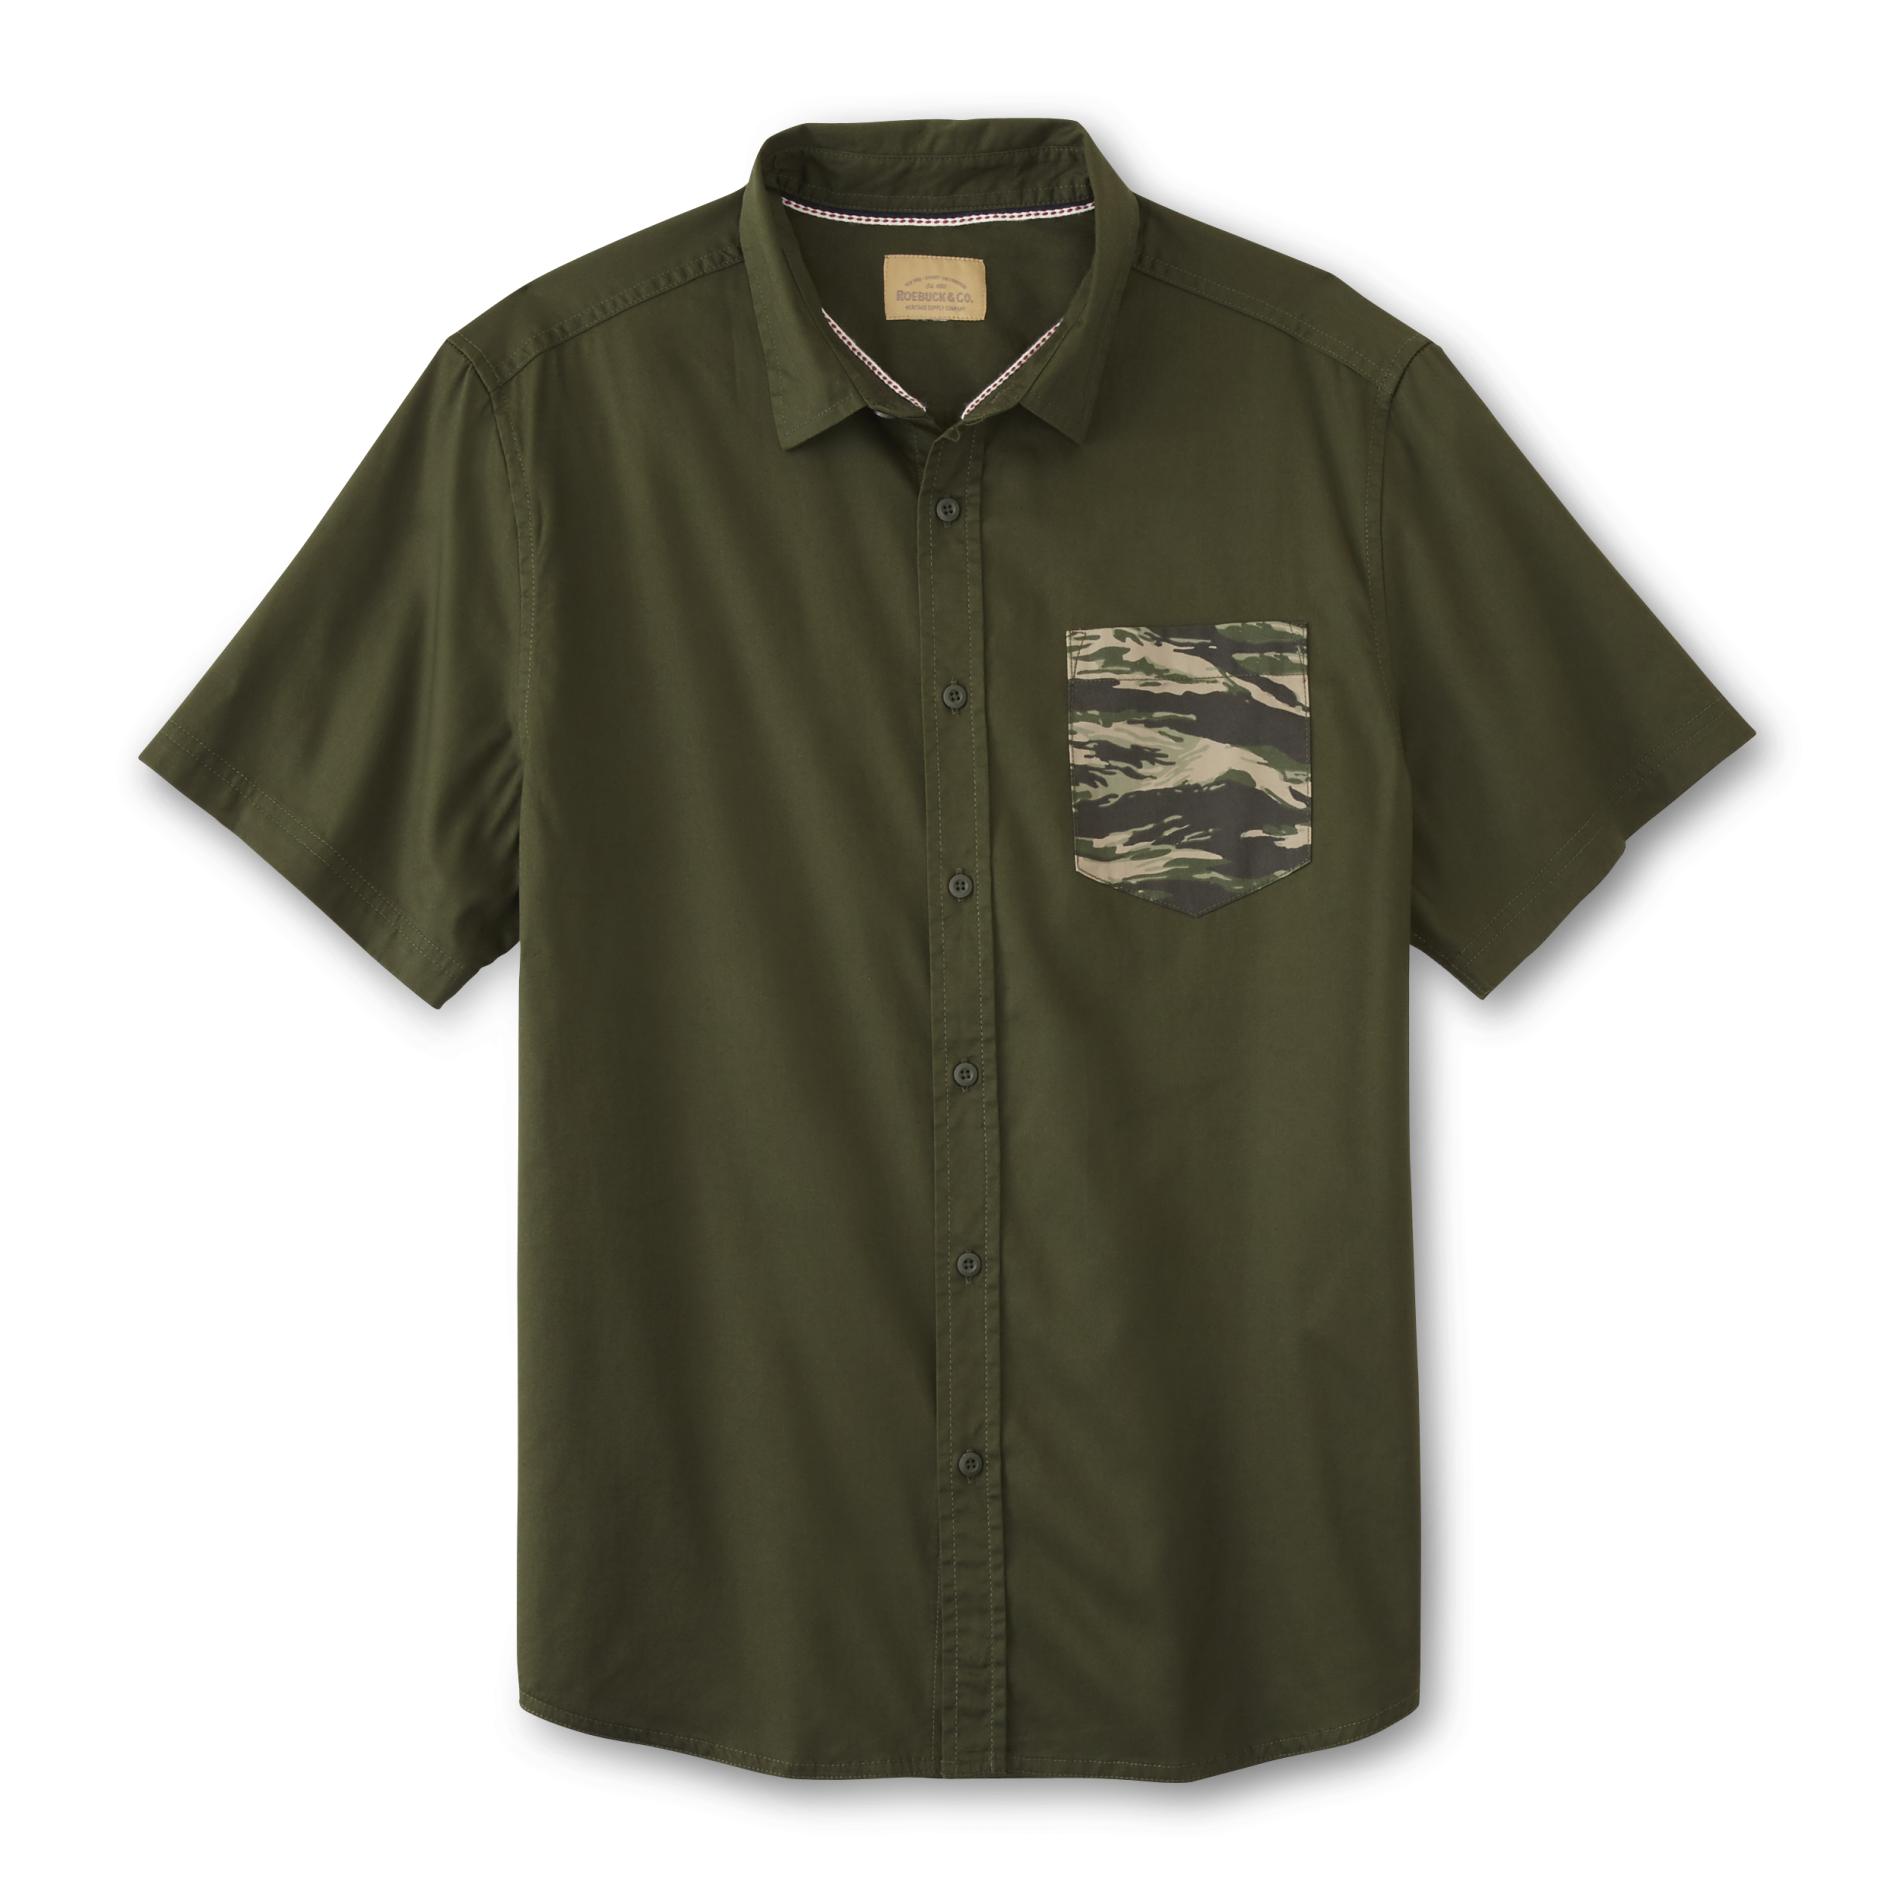 Roebuck & Co. Young Men's Short-Sleeve Shirt